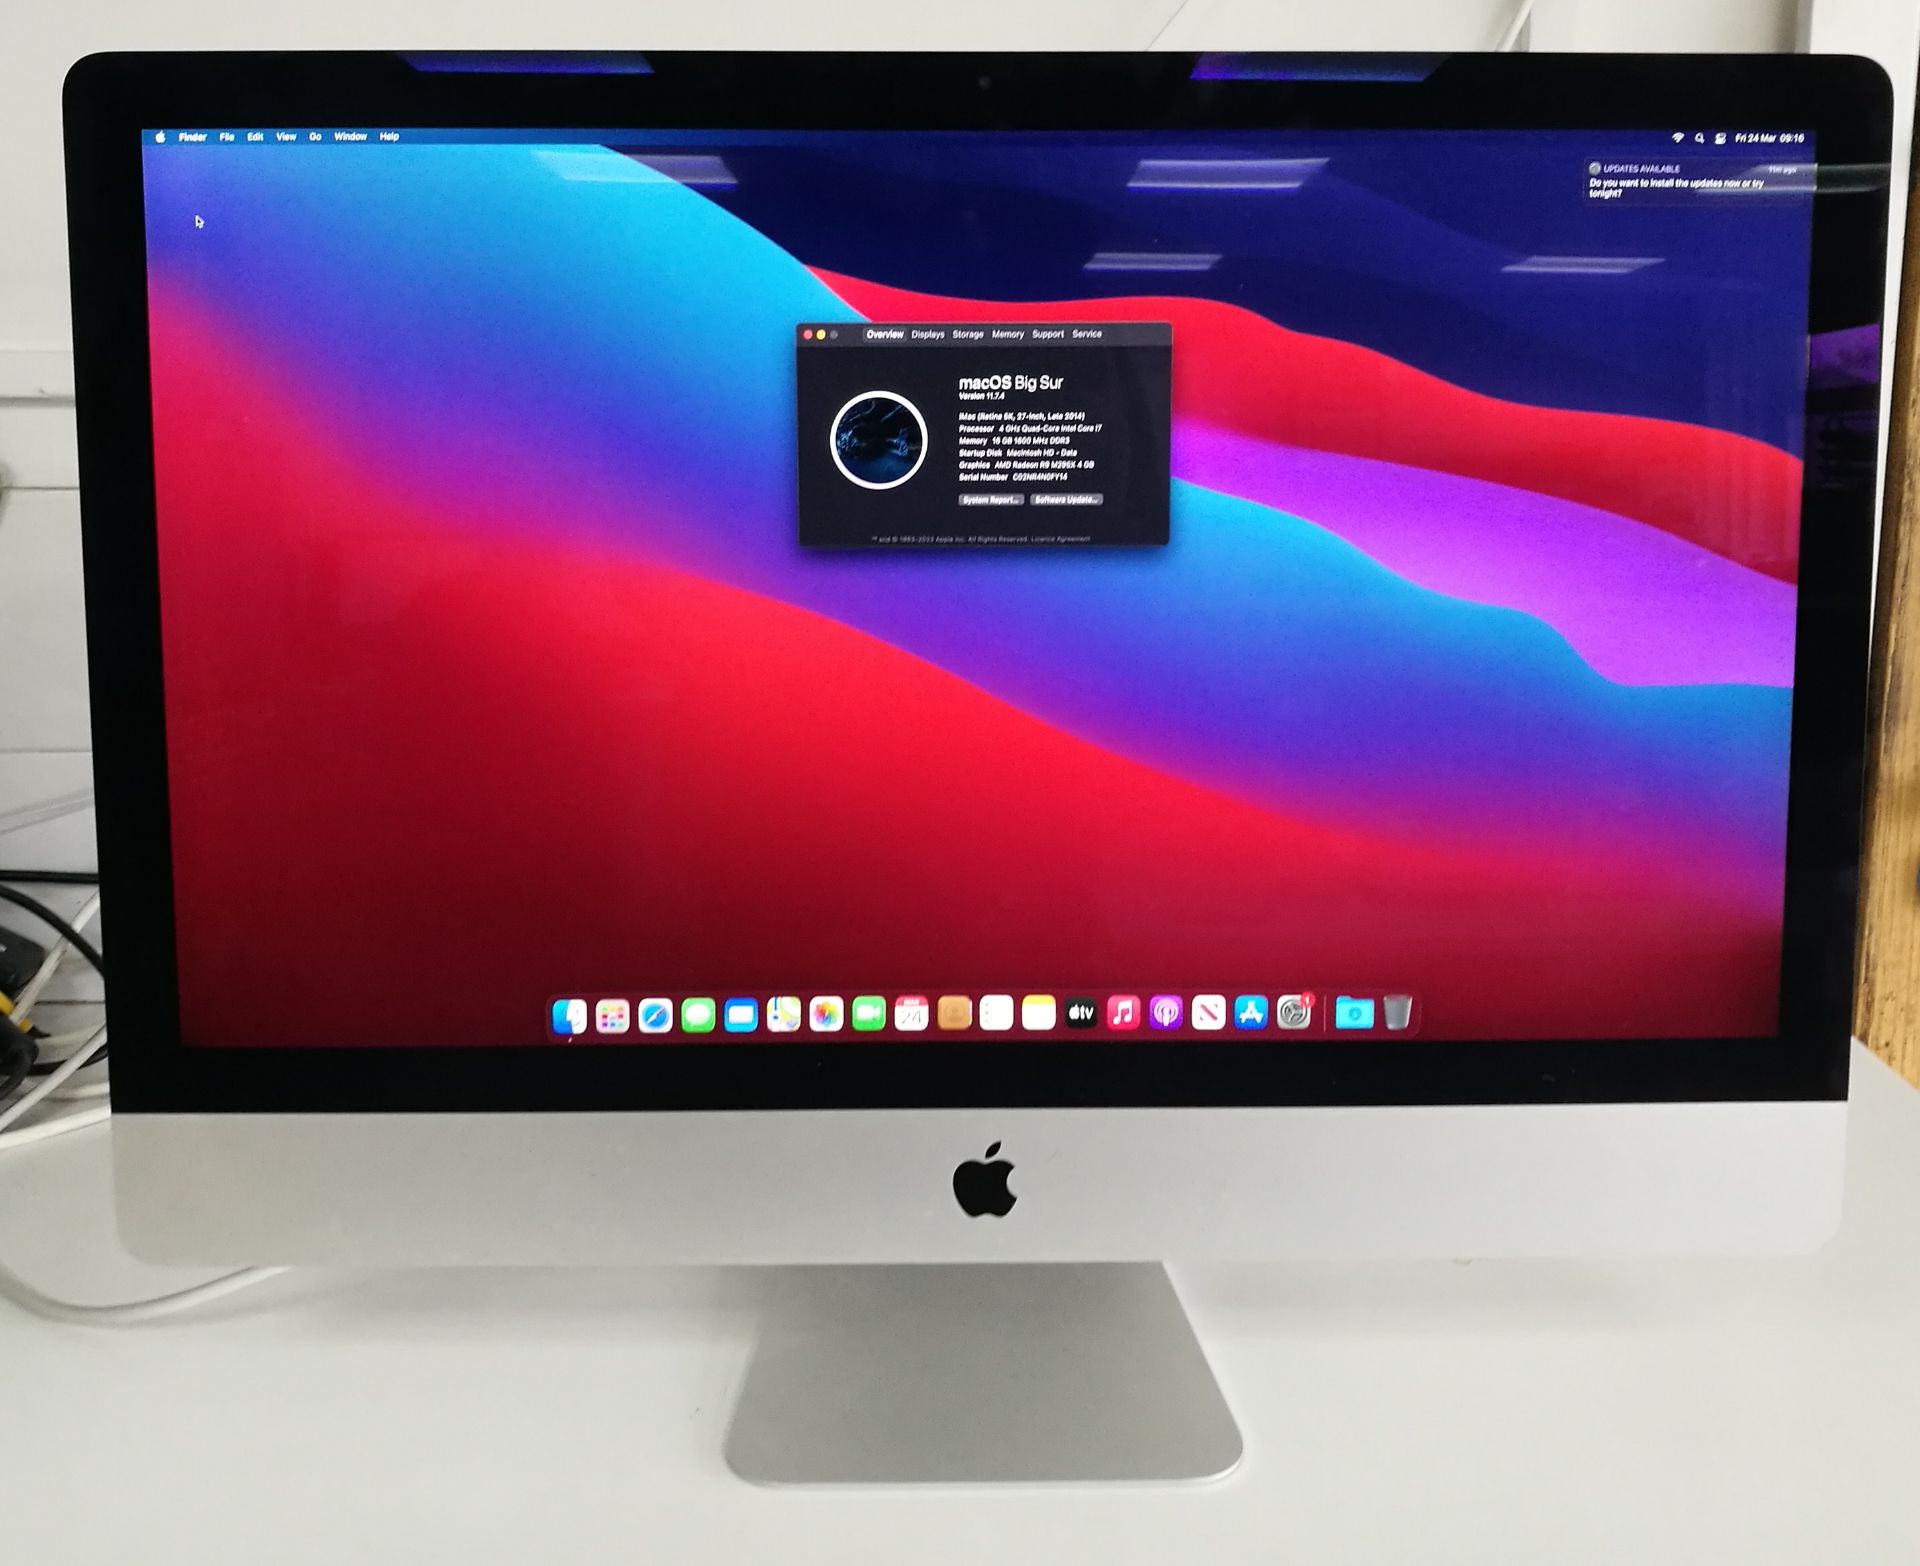 Apple iMac (Retina 5K, 27-inch, Late 2014) (with NSP Flight Bag)